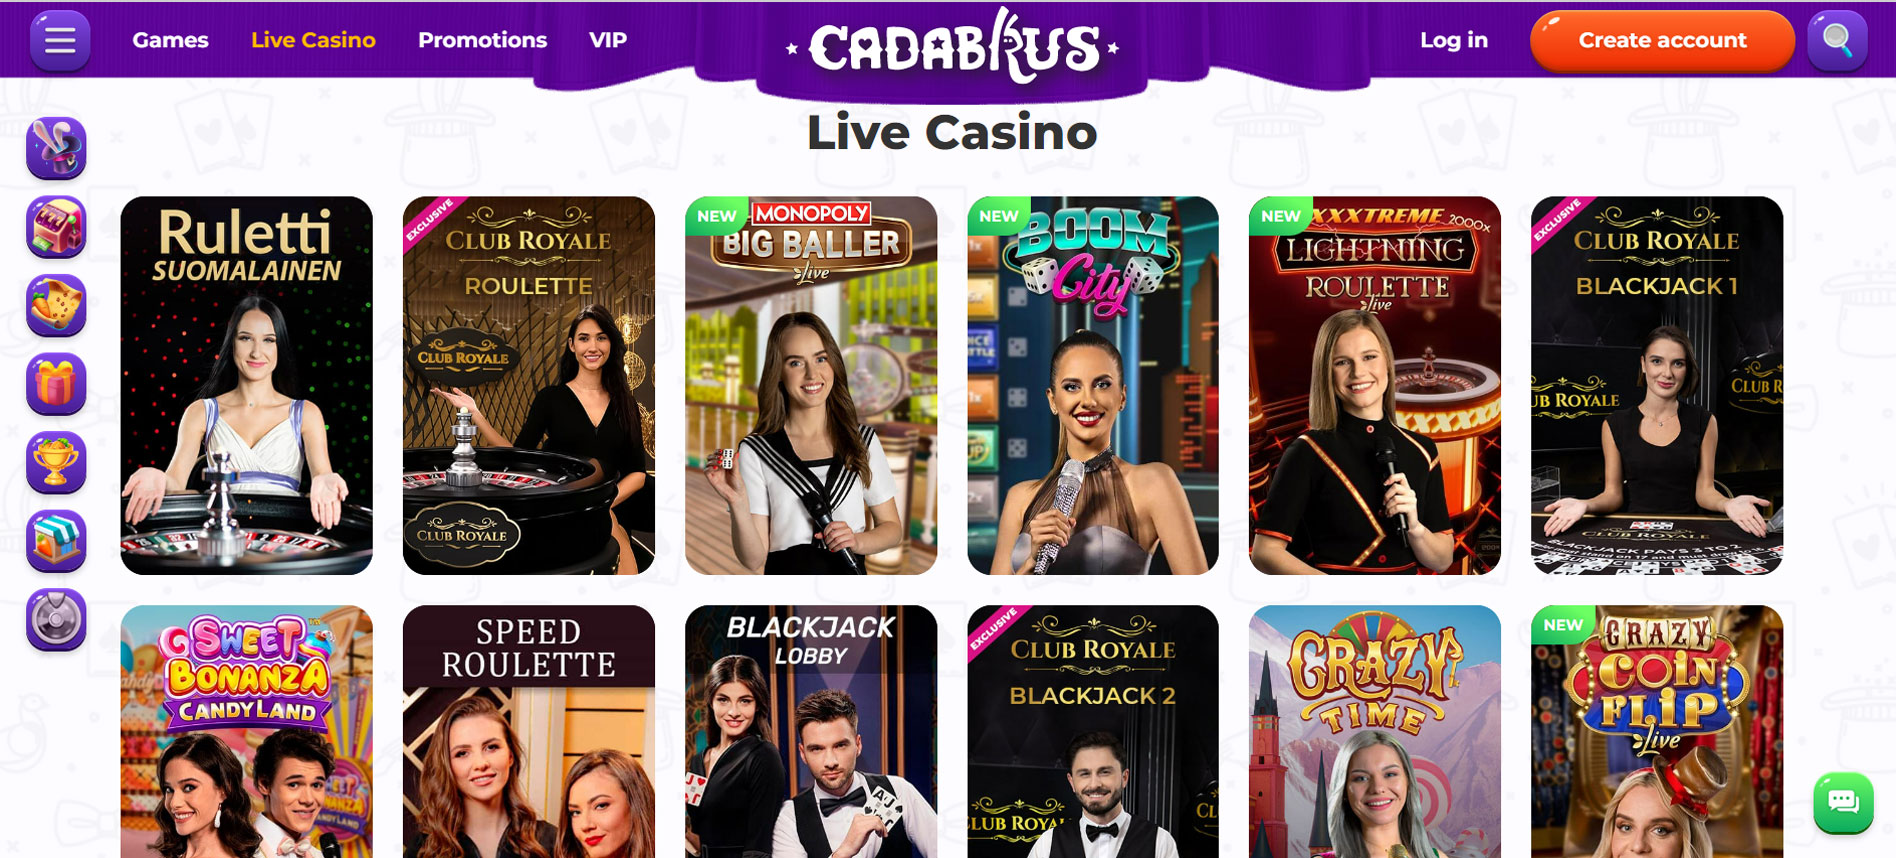 Cadabrus Casino Live Casino